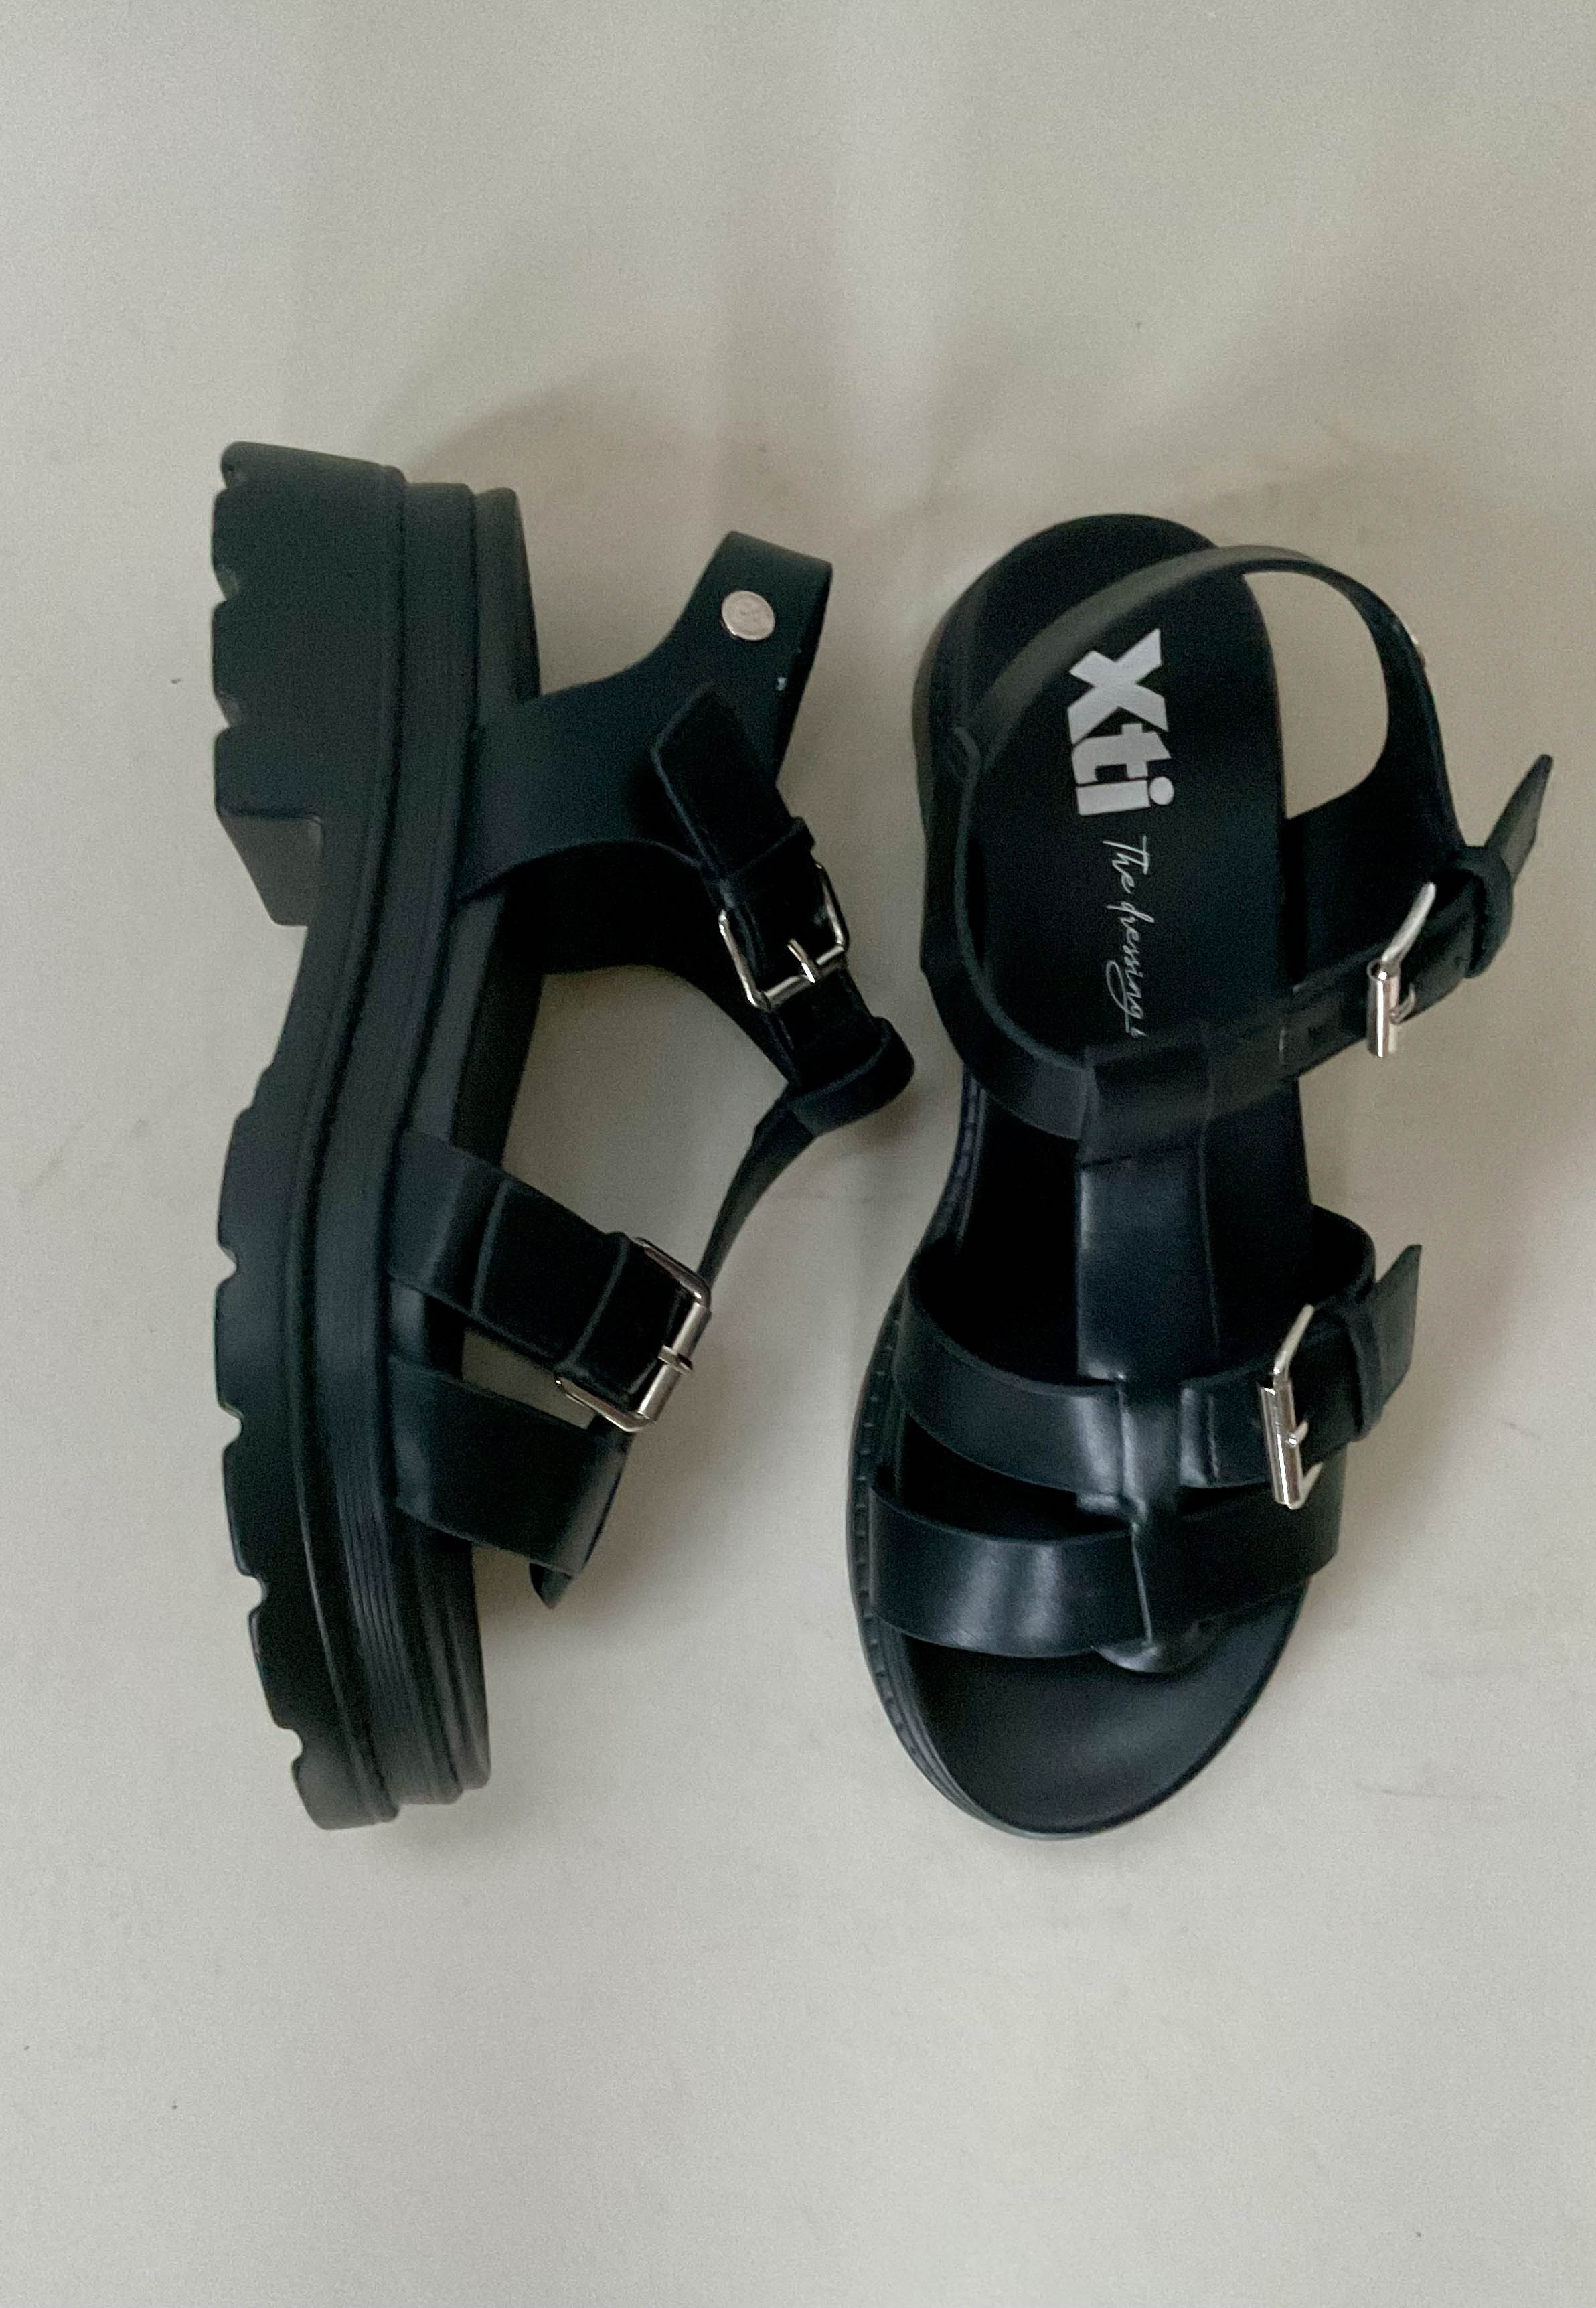 black chunky sandals